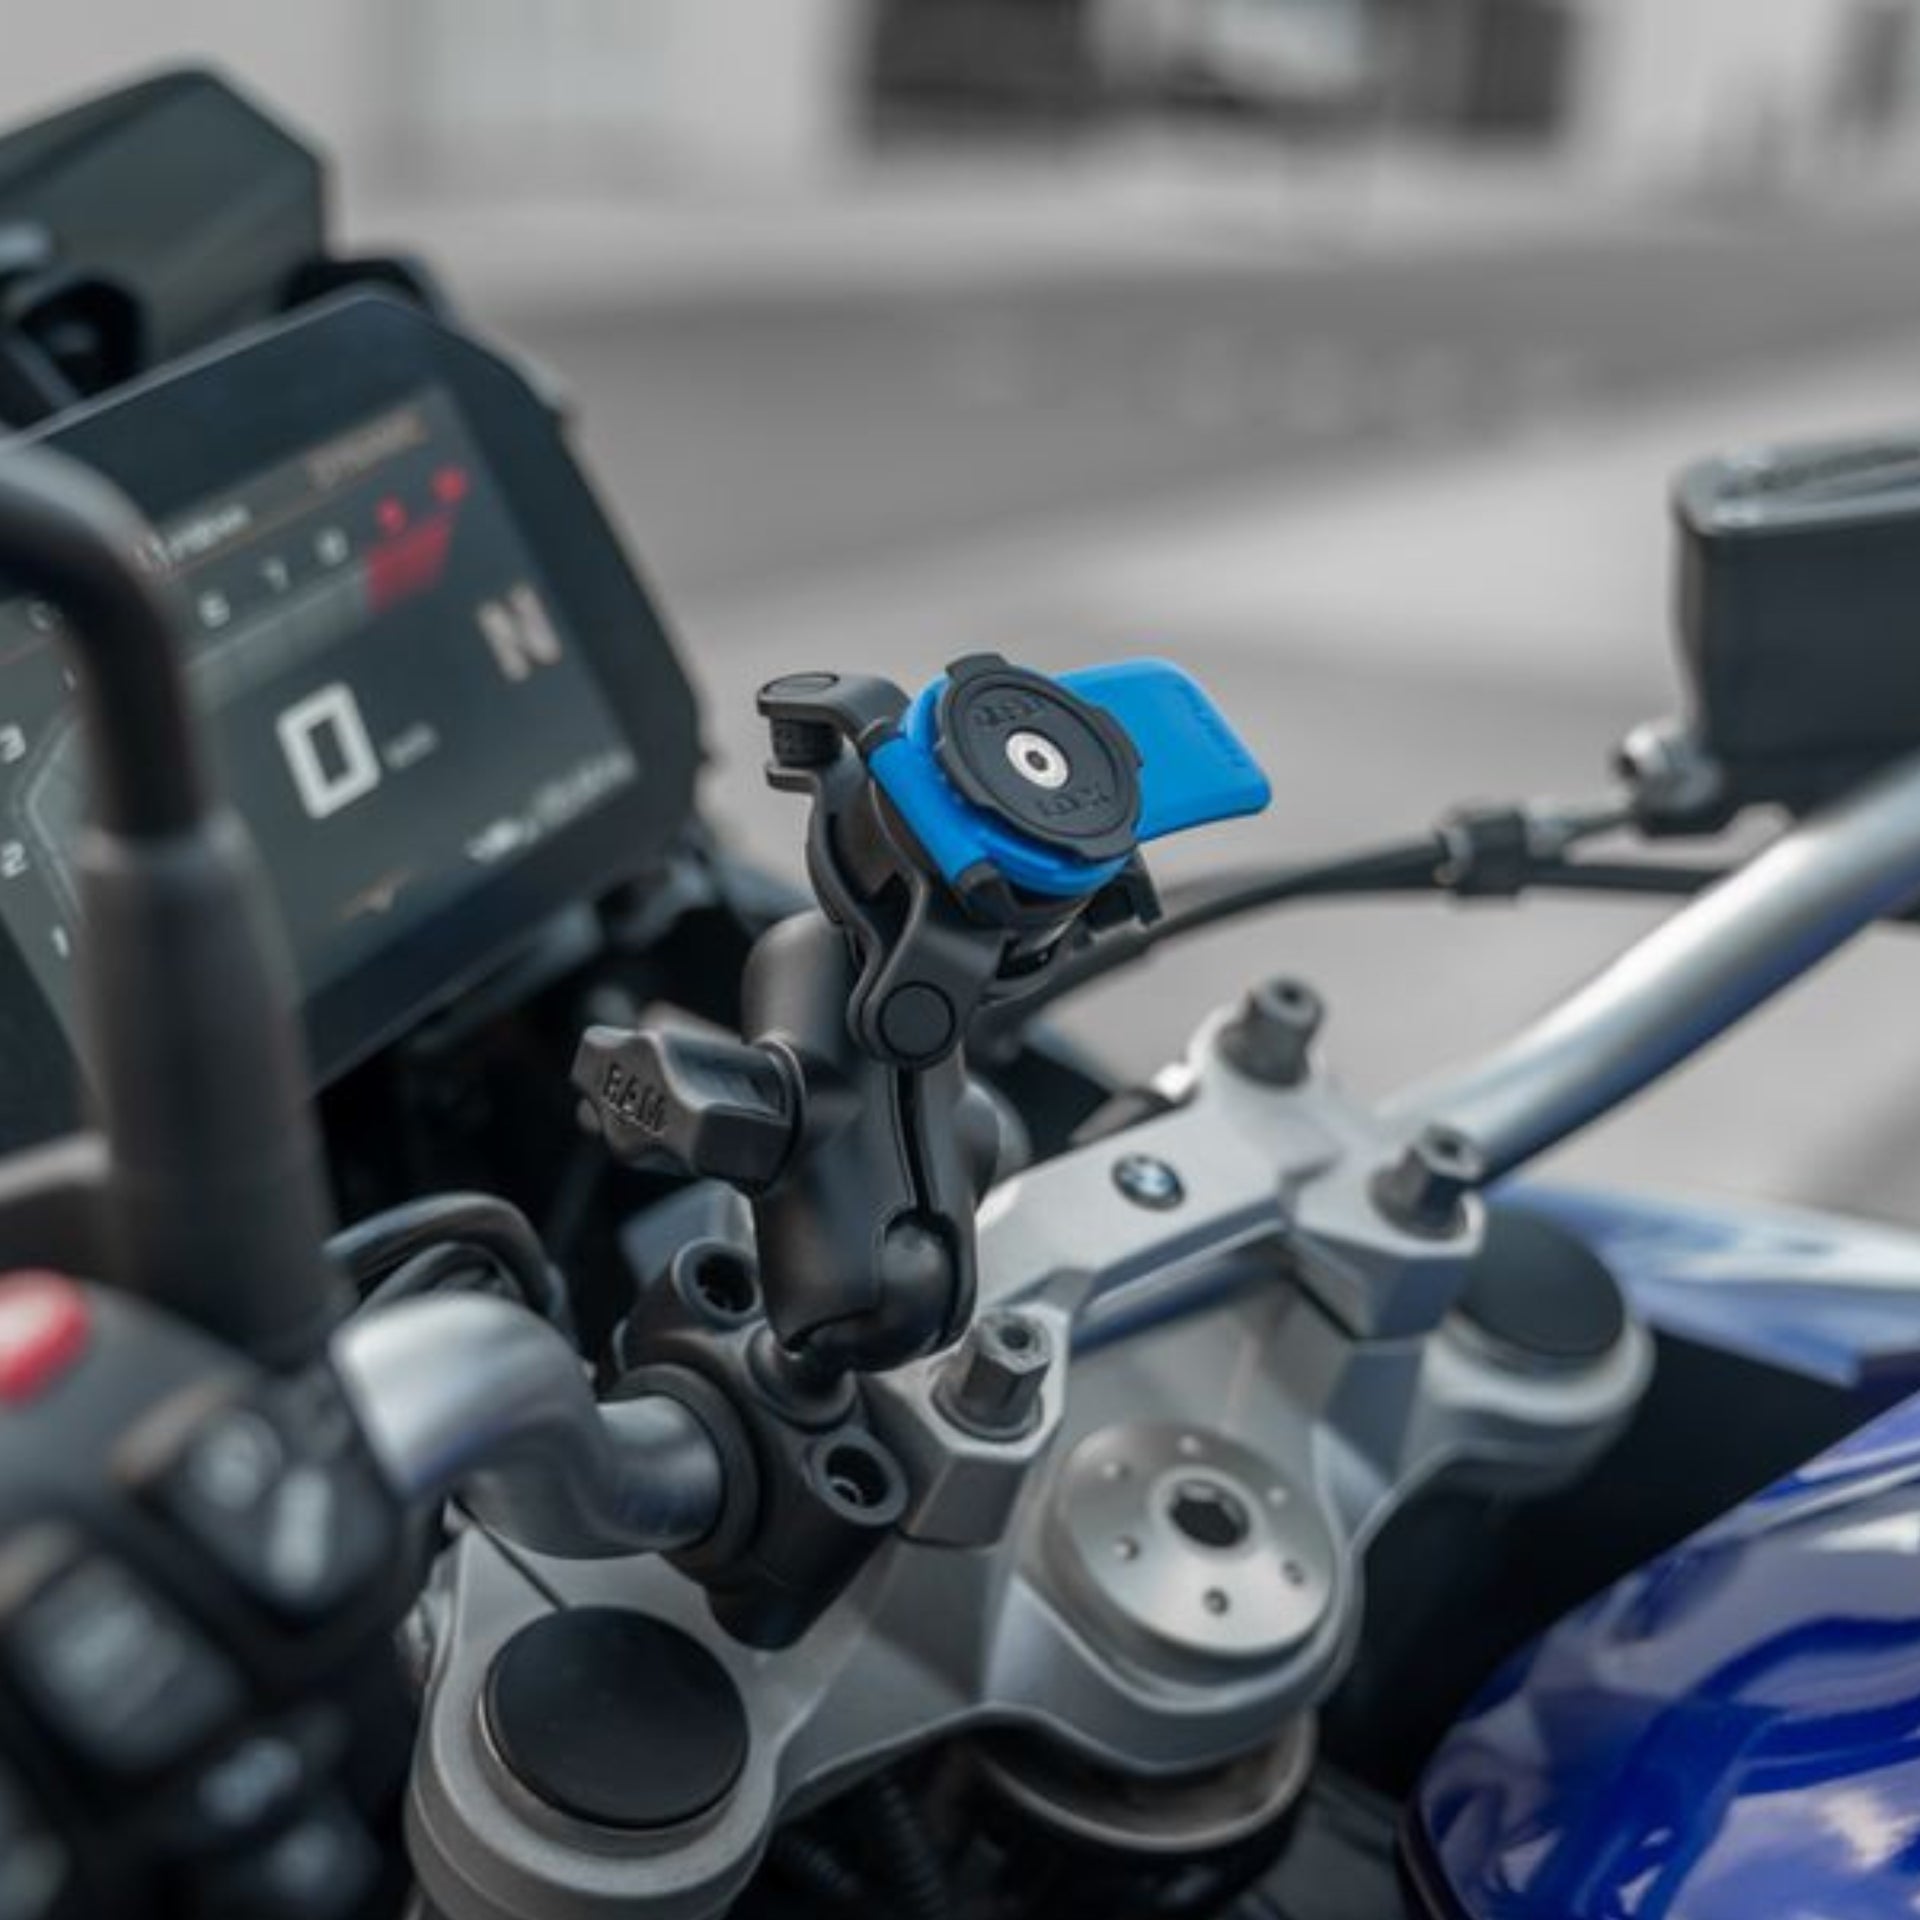 Quad Lock Motorcycle Vibration Dampener